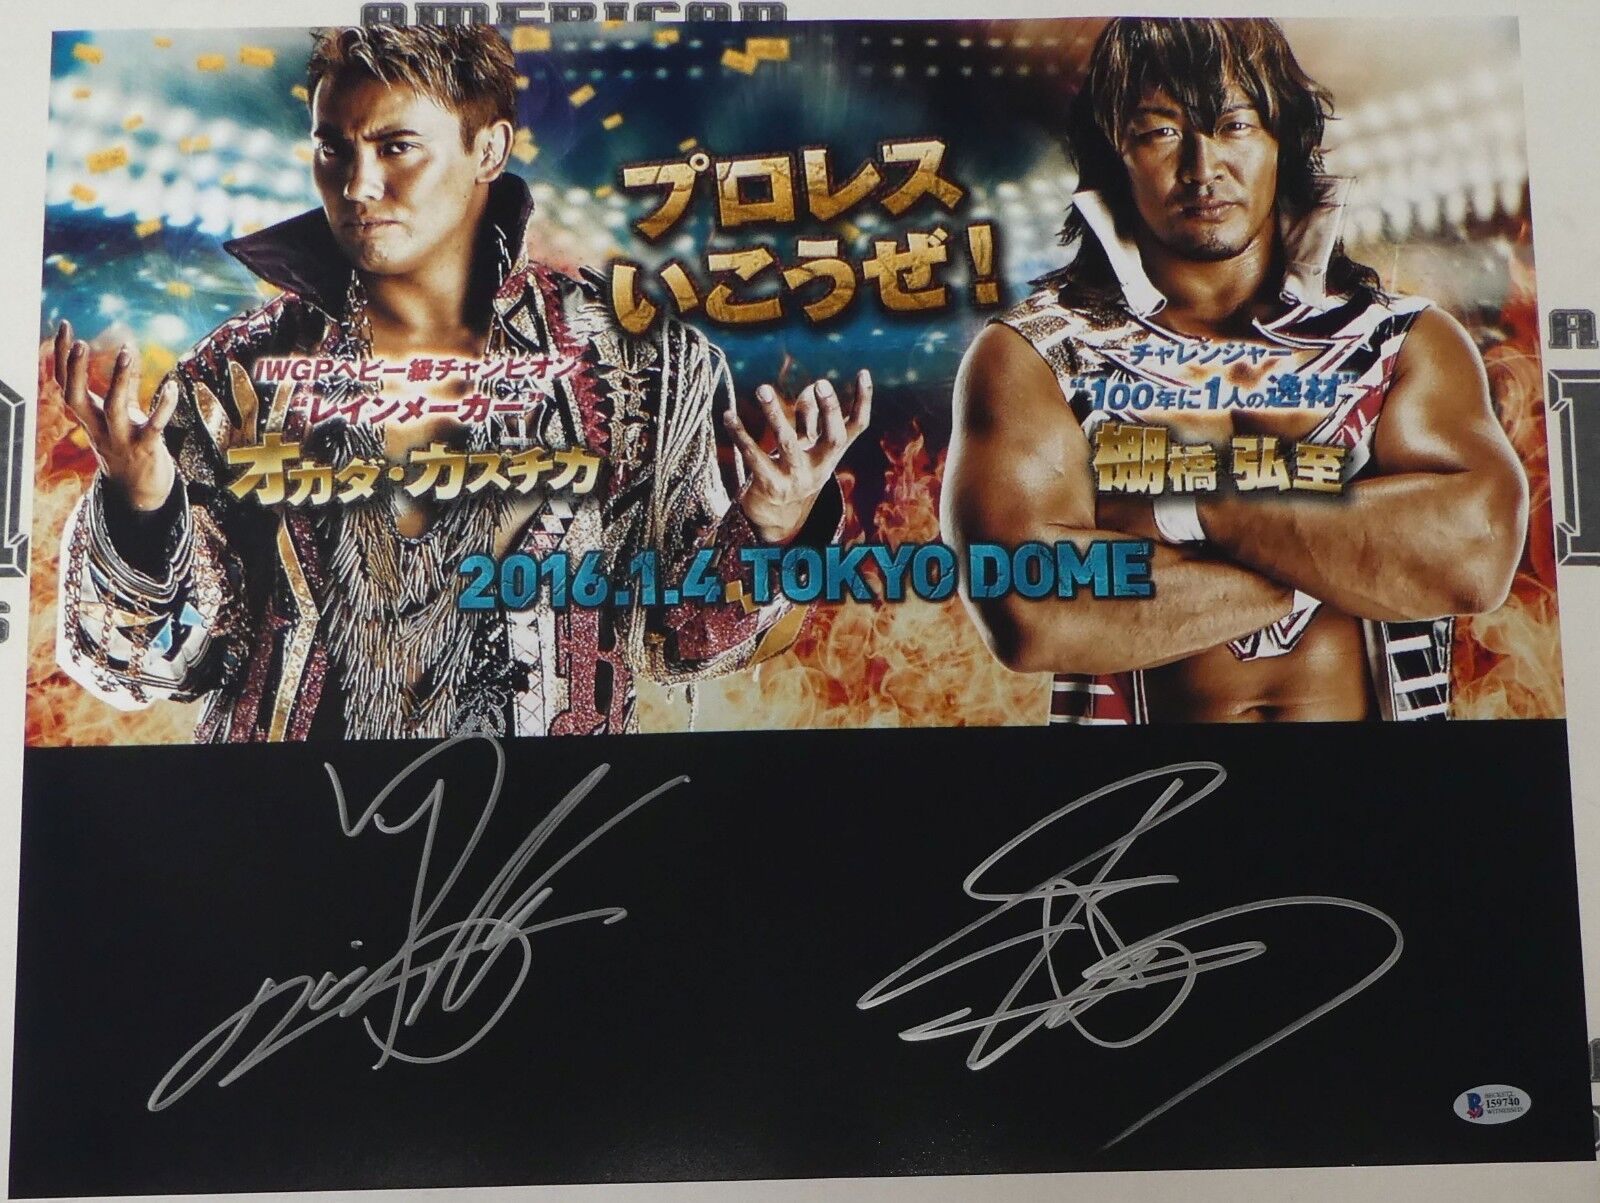 Kazuchika Okada Hiroshi Tanahashi Signed 16x20 Photo Poster painting BAS New Japan Pro Wrestling